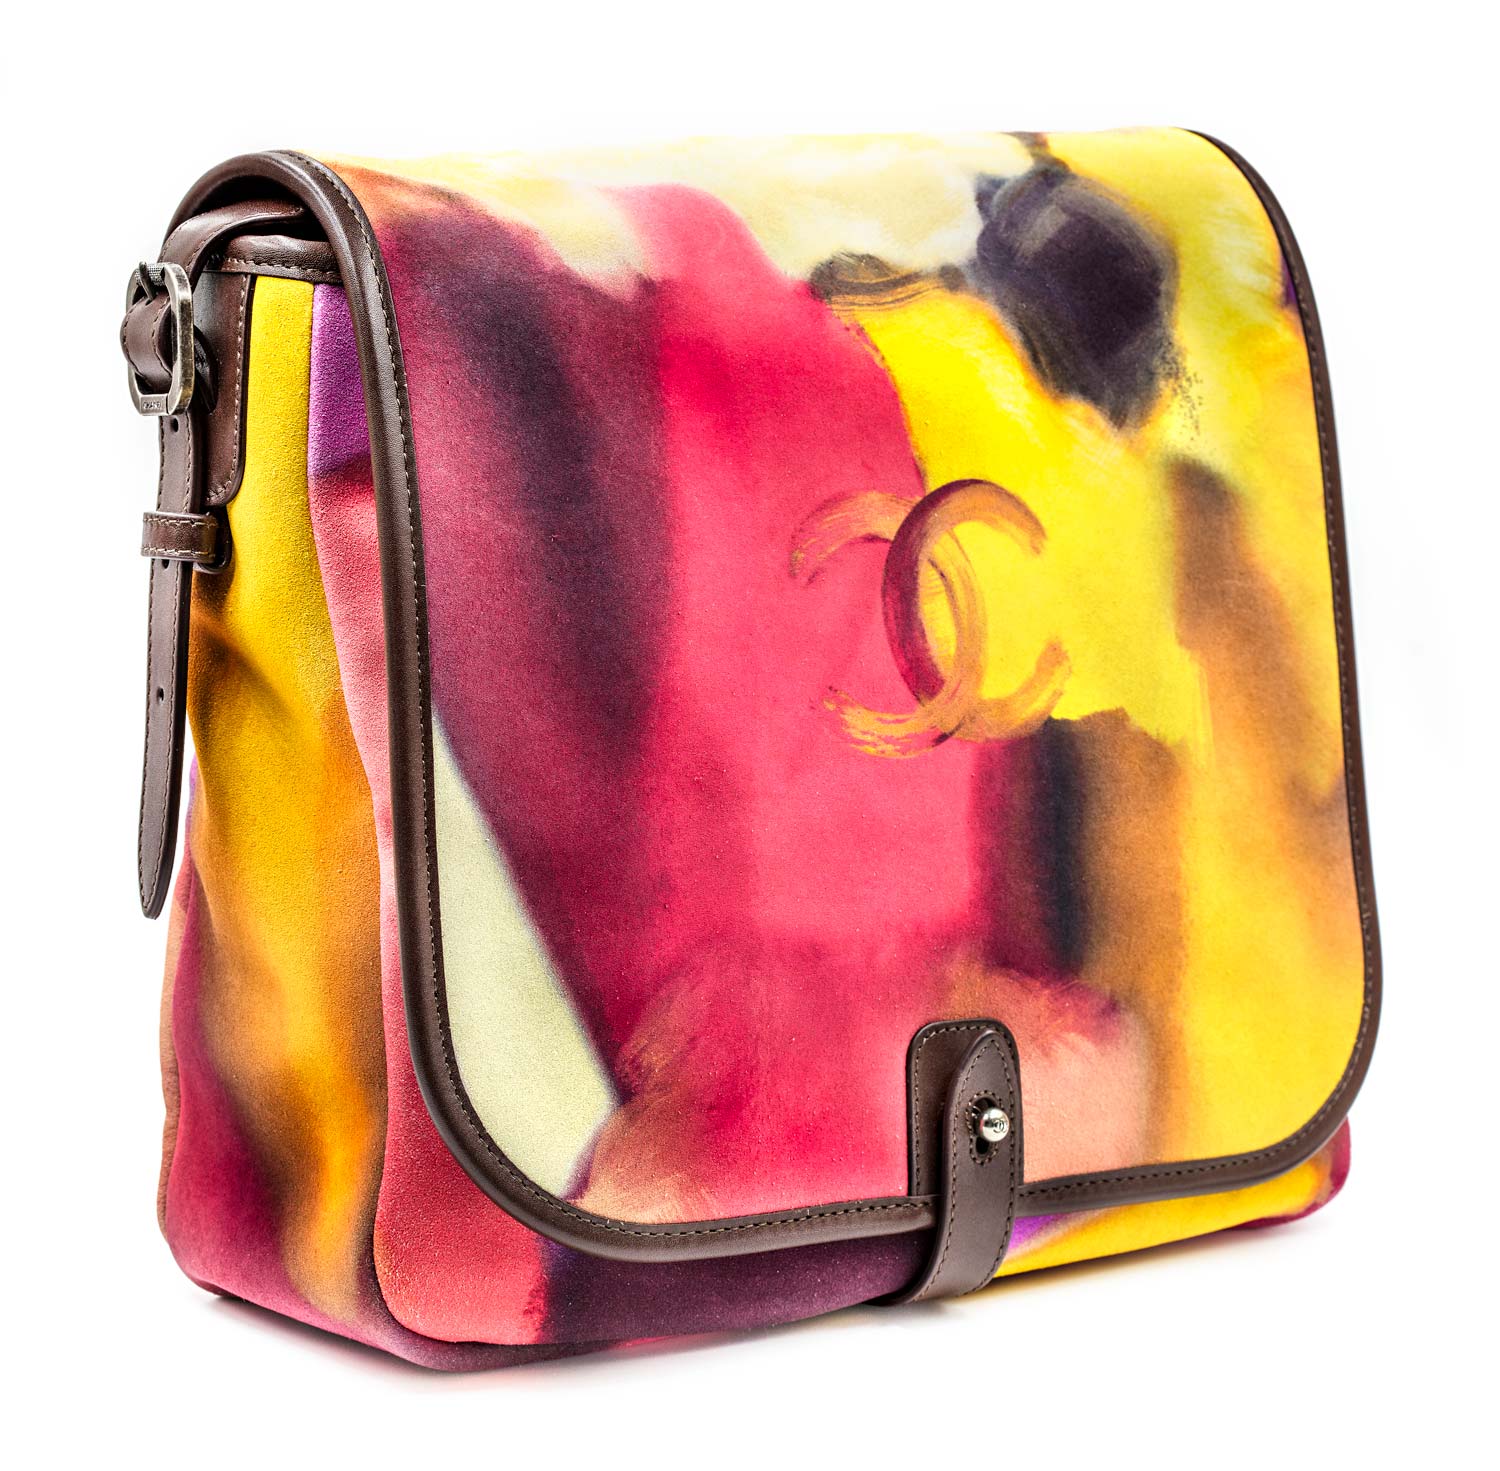 Sohibrandname - 2015 Chanel Multicolor Tie Dye Messenger Bag